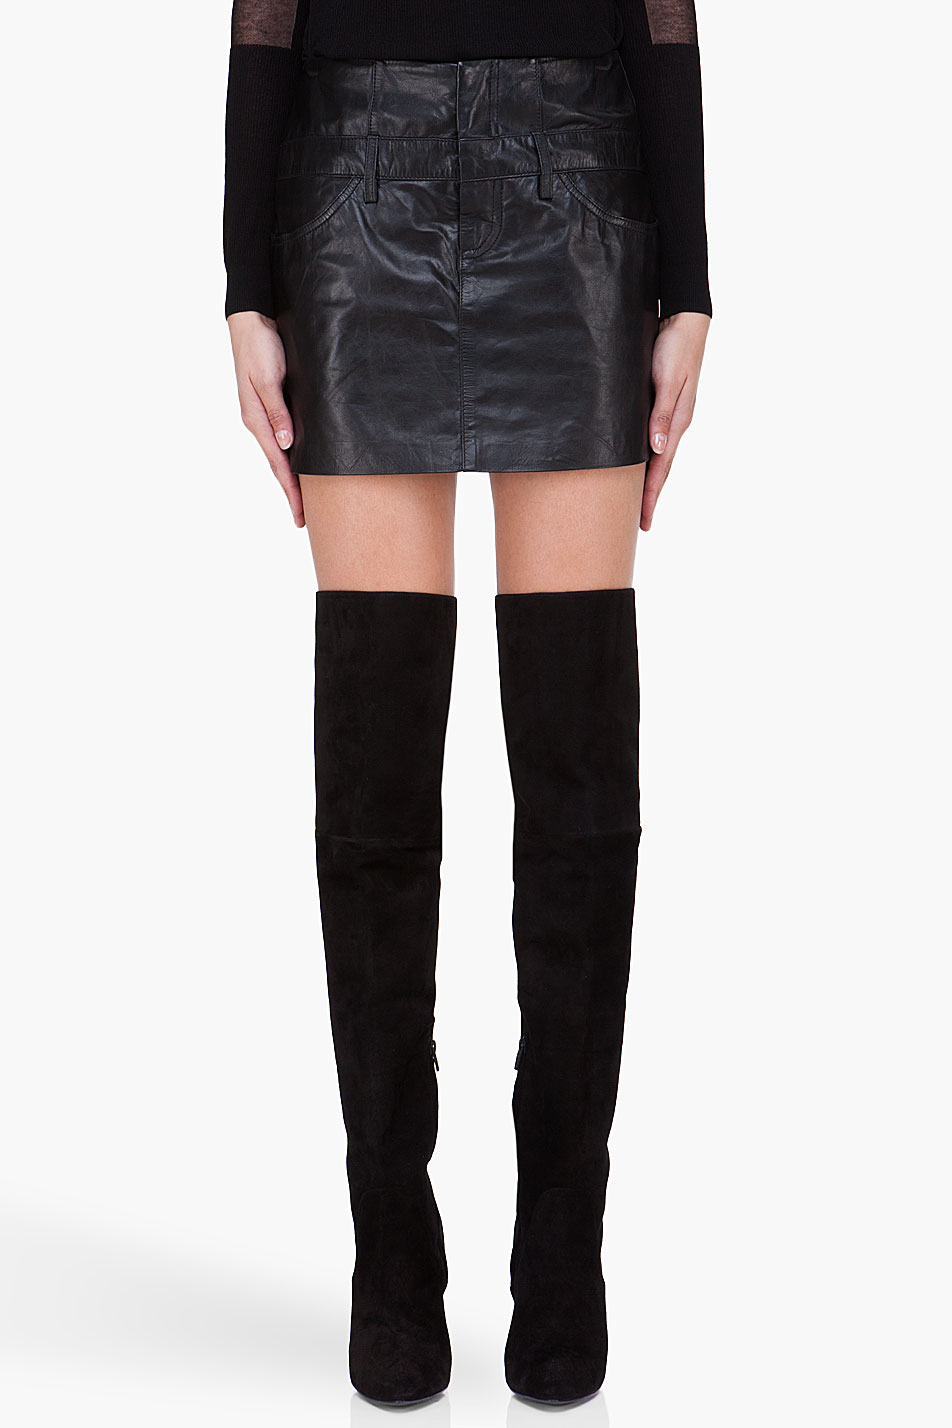 Lyst - Theyskens' Theory Black Leather Safaa Skirt in Black